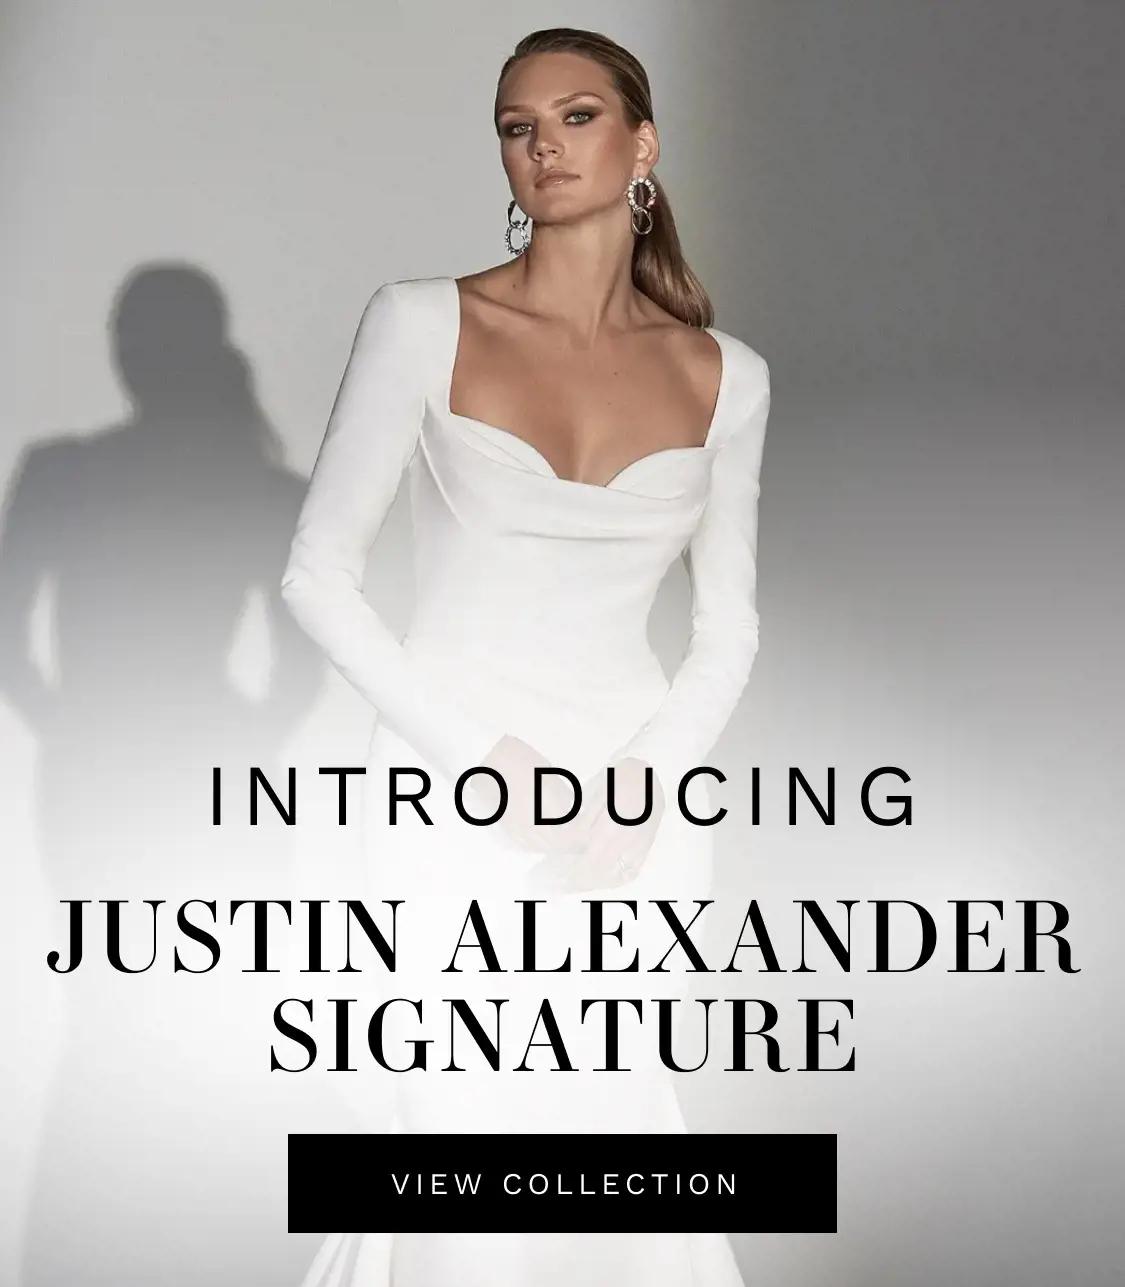 "Justin Alexander Signature" banner for mobile